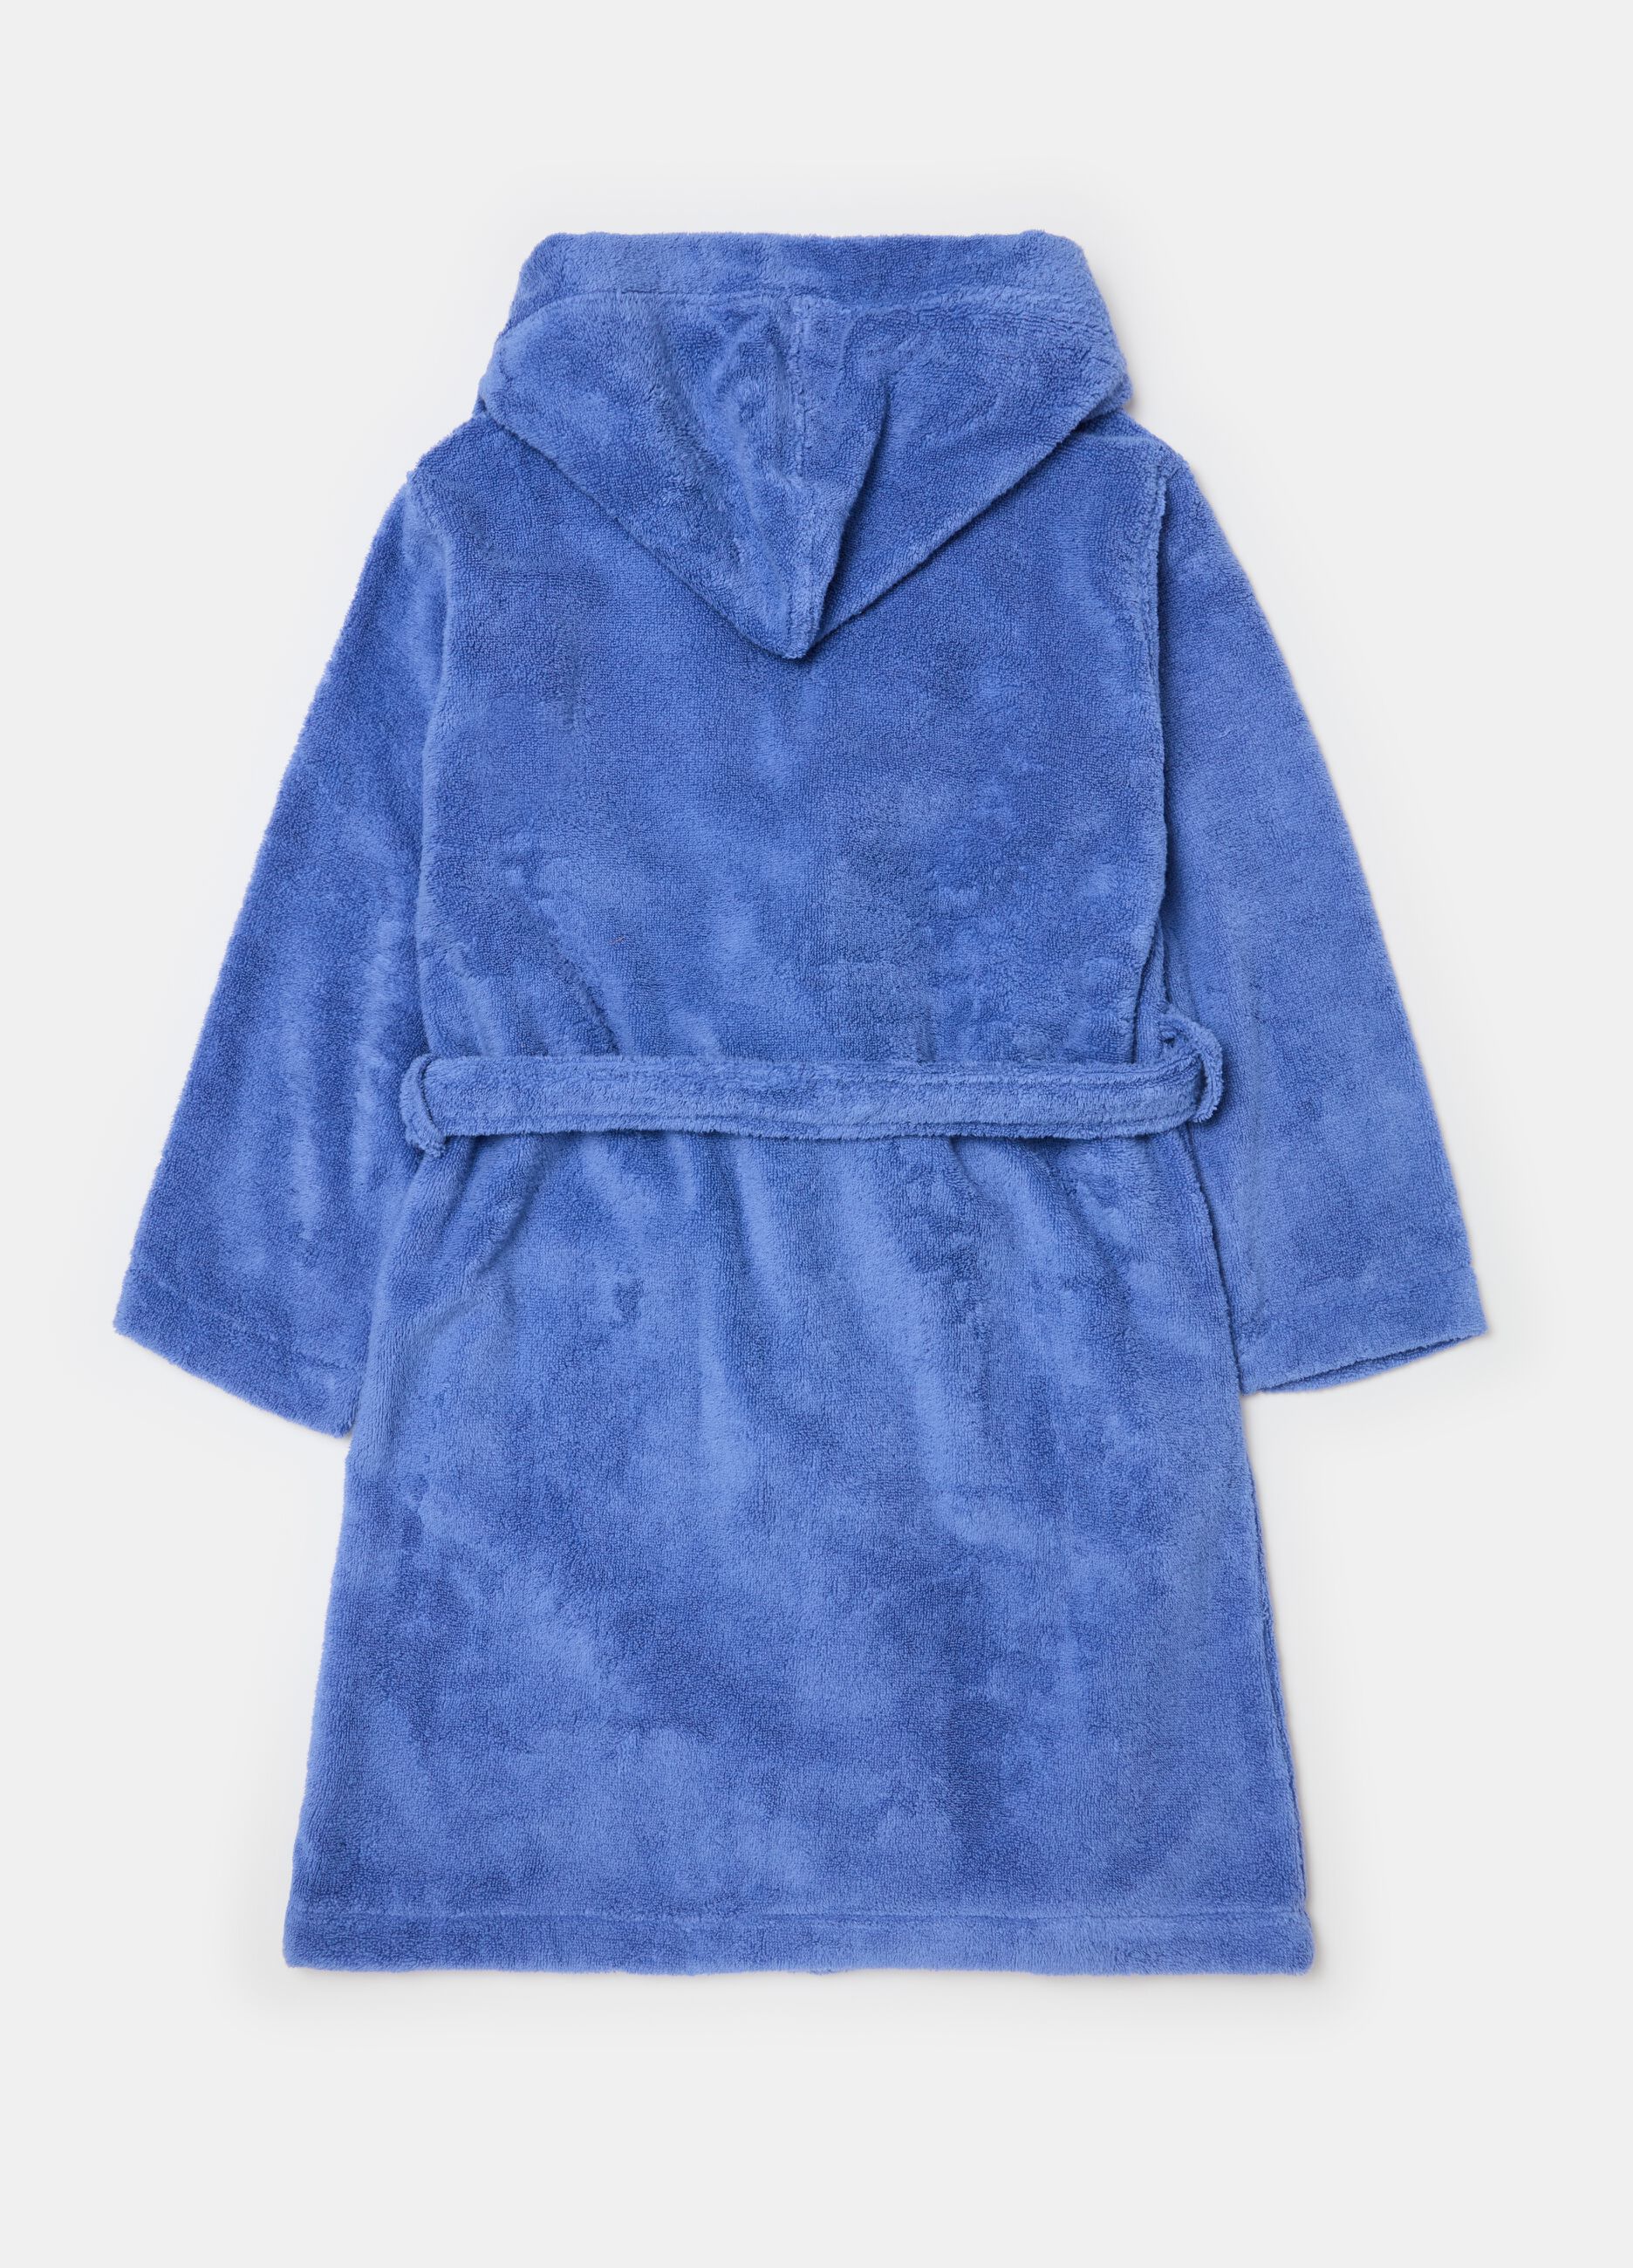 Solid colour bathrobe size S/M